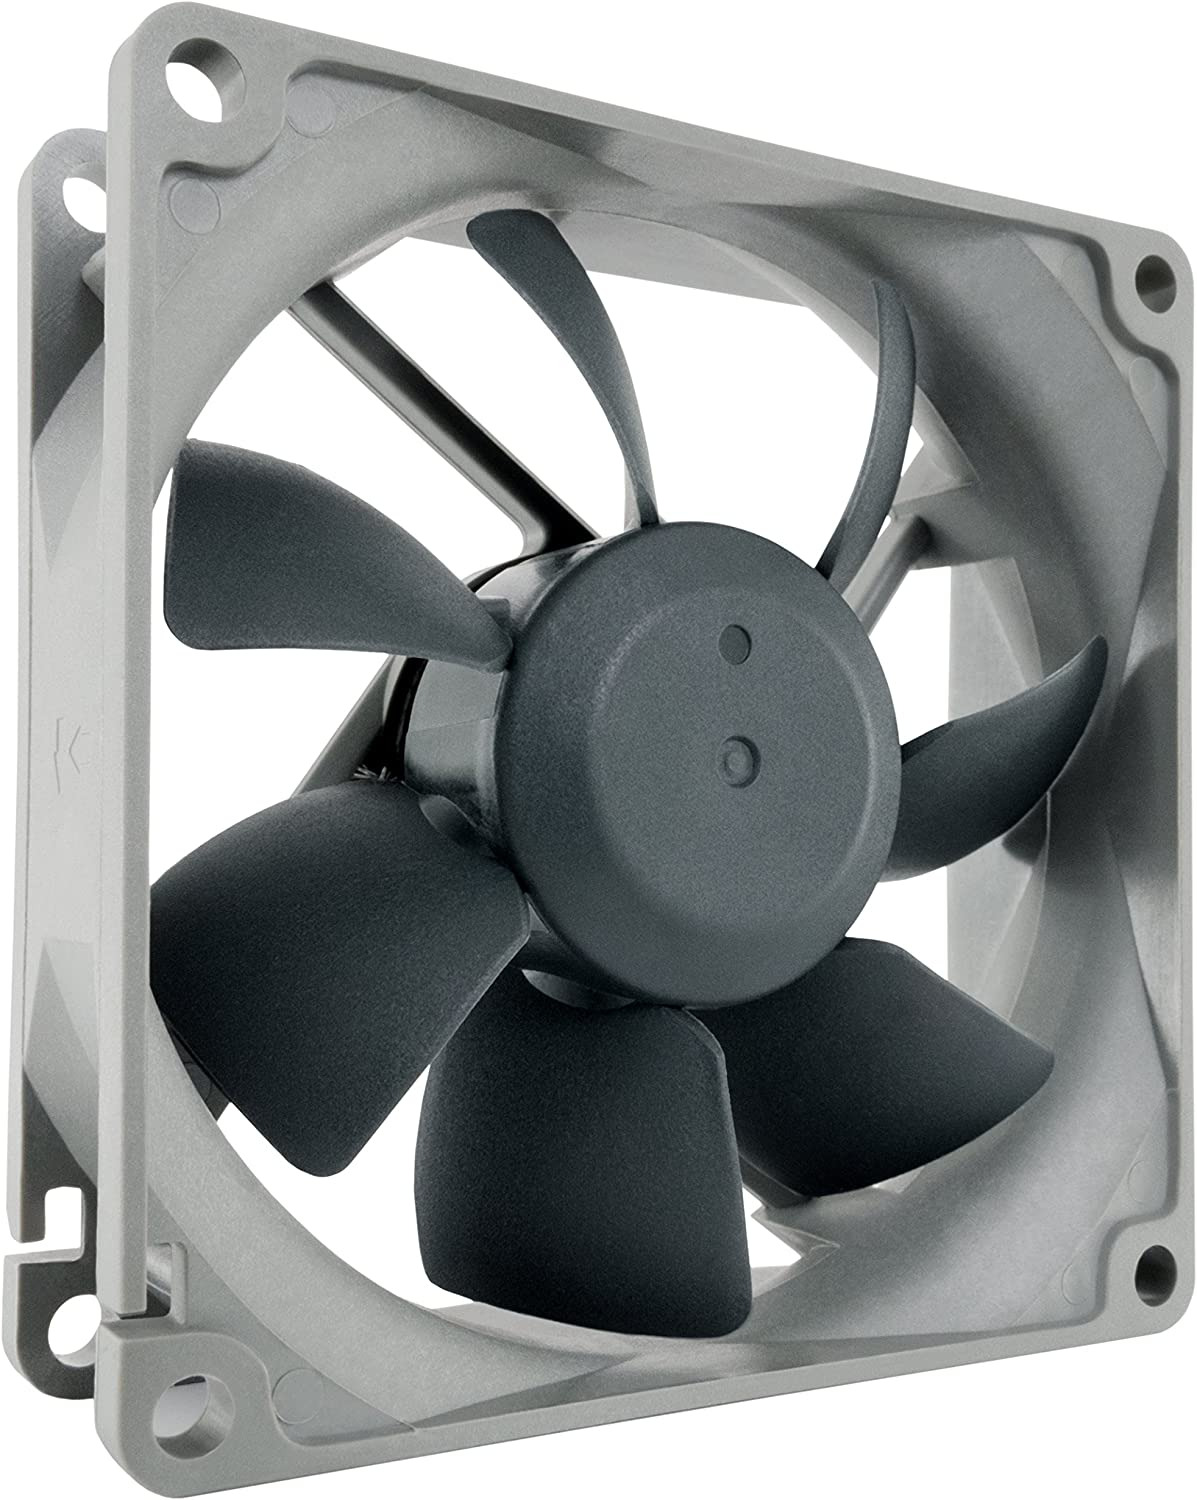 Noctua NF-R8 redux-1800 PWM High Performance Cooling Fan 4-Pin 1800 RPM 80mm ...